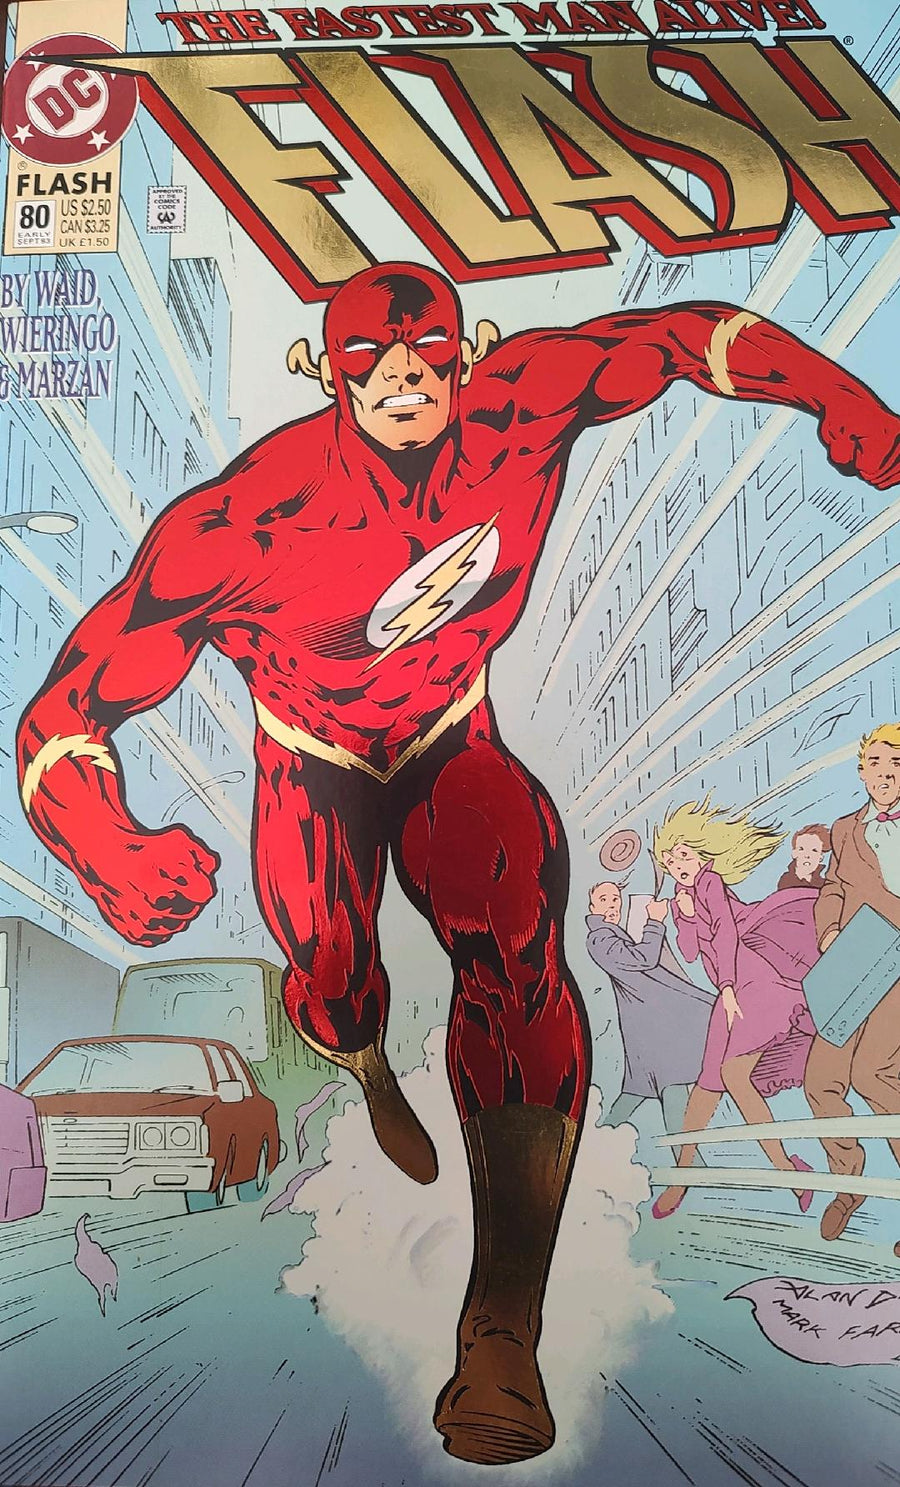 Flash #80 Vol 2 1993 Comic Book Cover